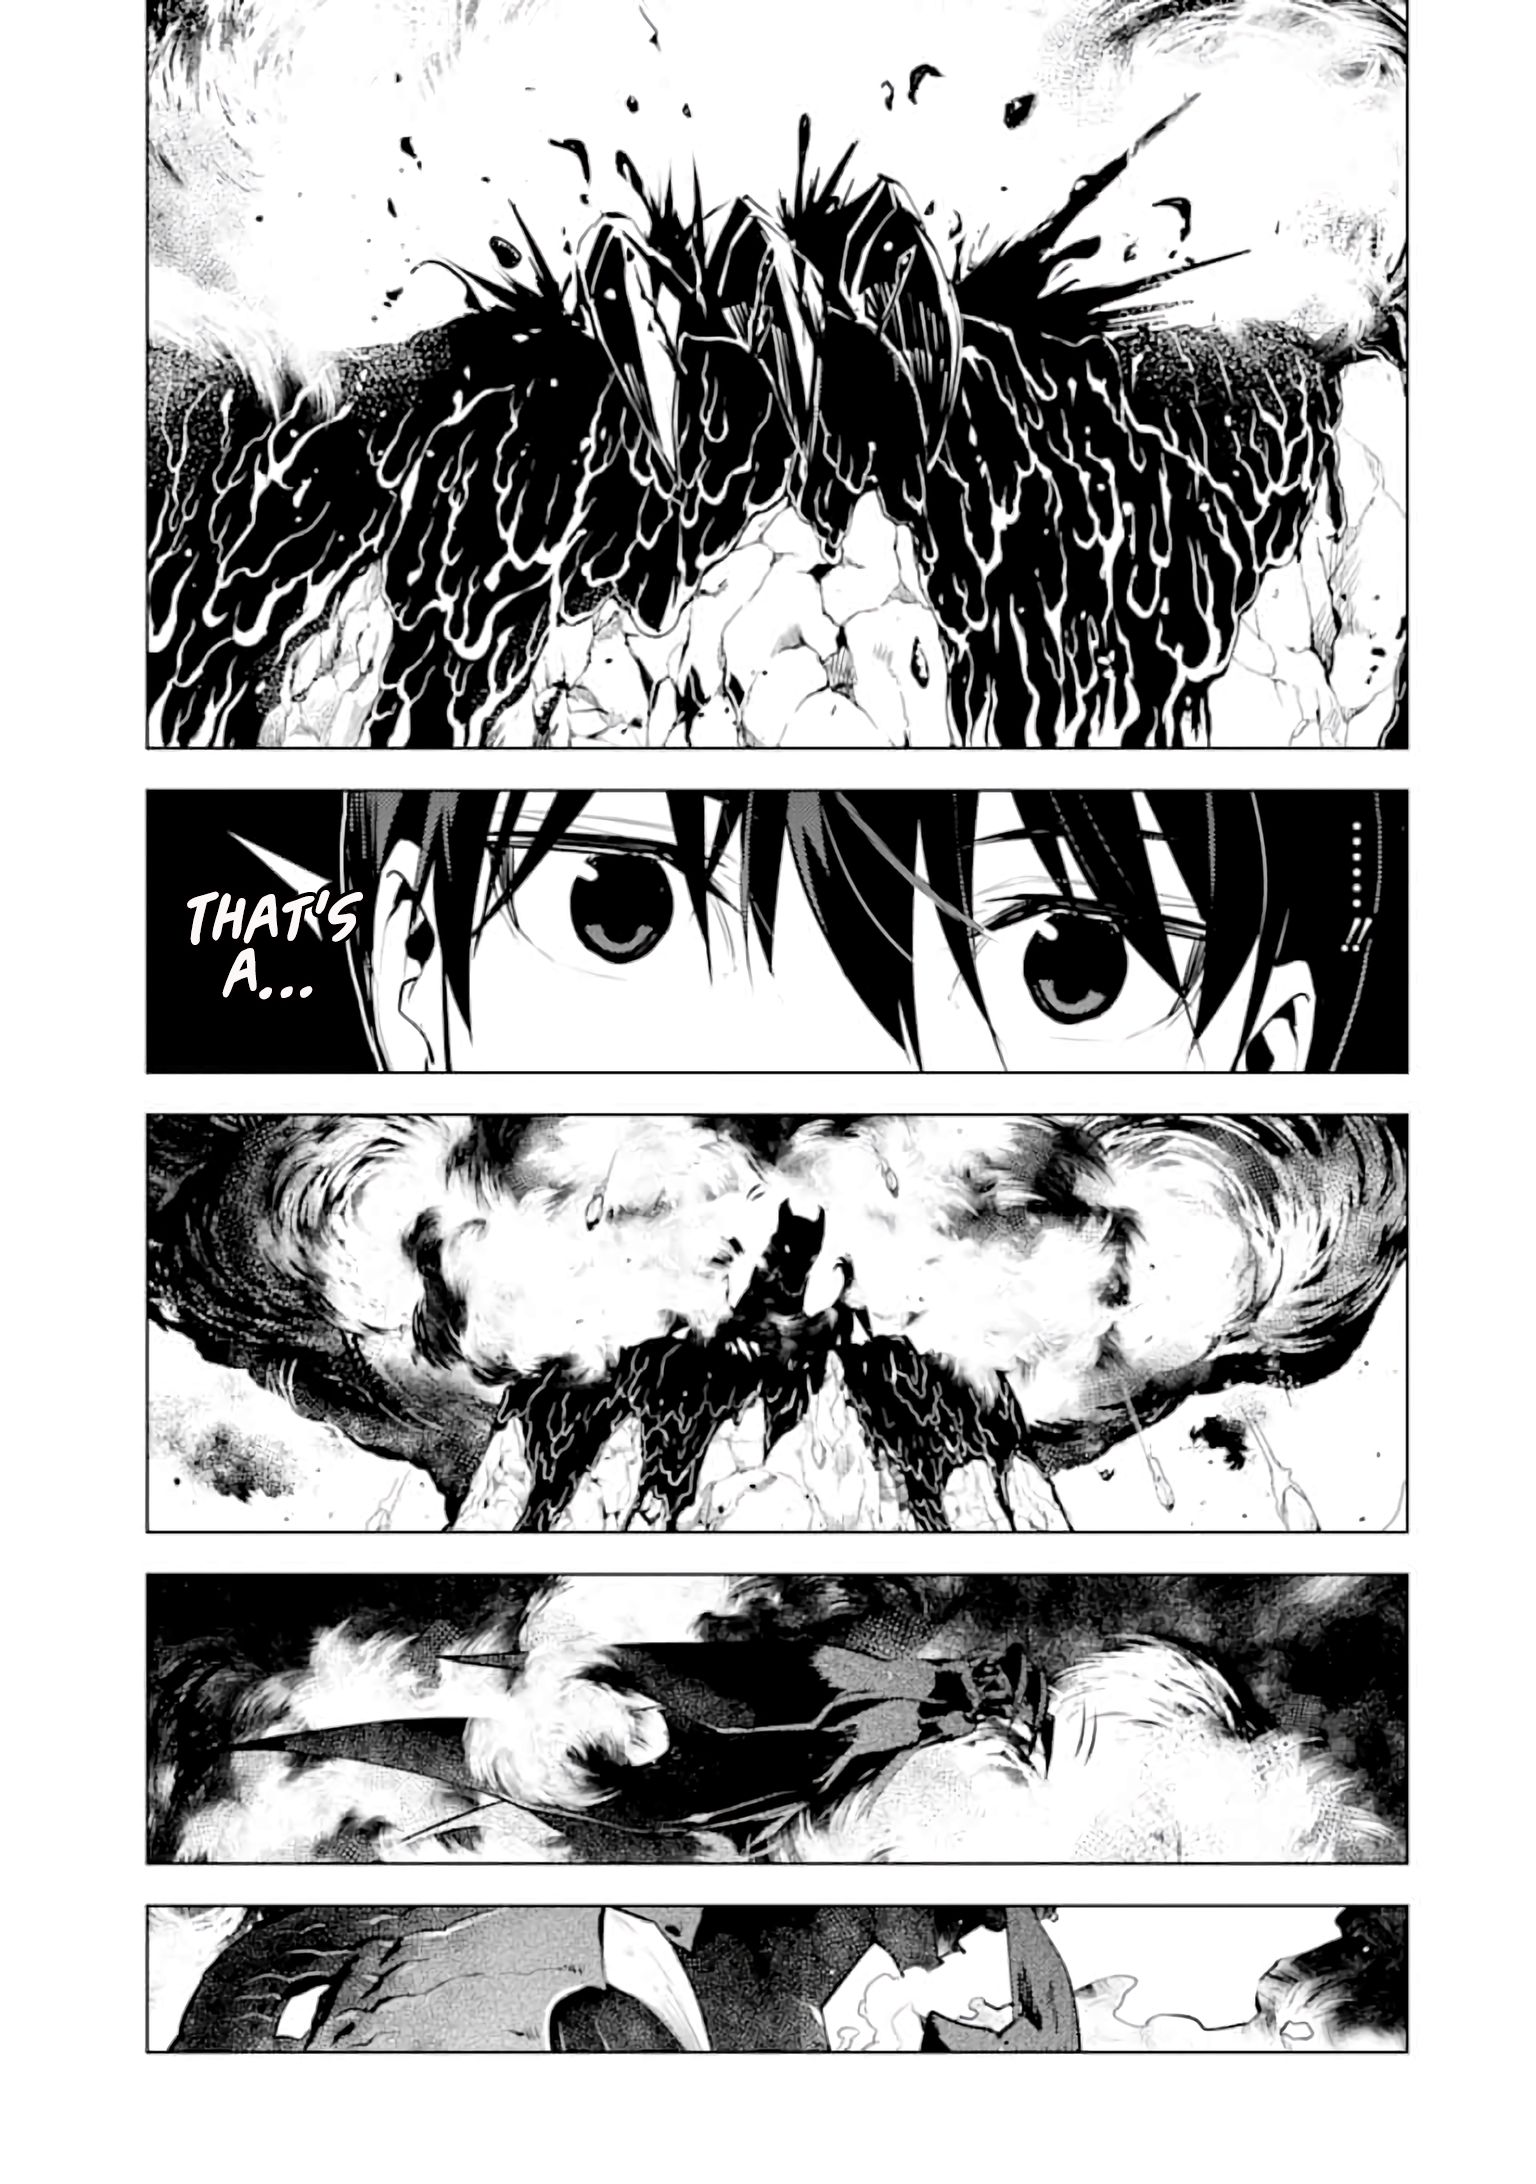 Read Tensei Kenja No Isekai Raifu ~Daini No Shokugyo Wo Ete, Sekai Saikyou  Ni Narimashita~ Chapter 18: The Monsters' Armors Are Complete. - Manganelo